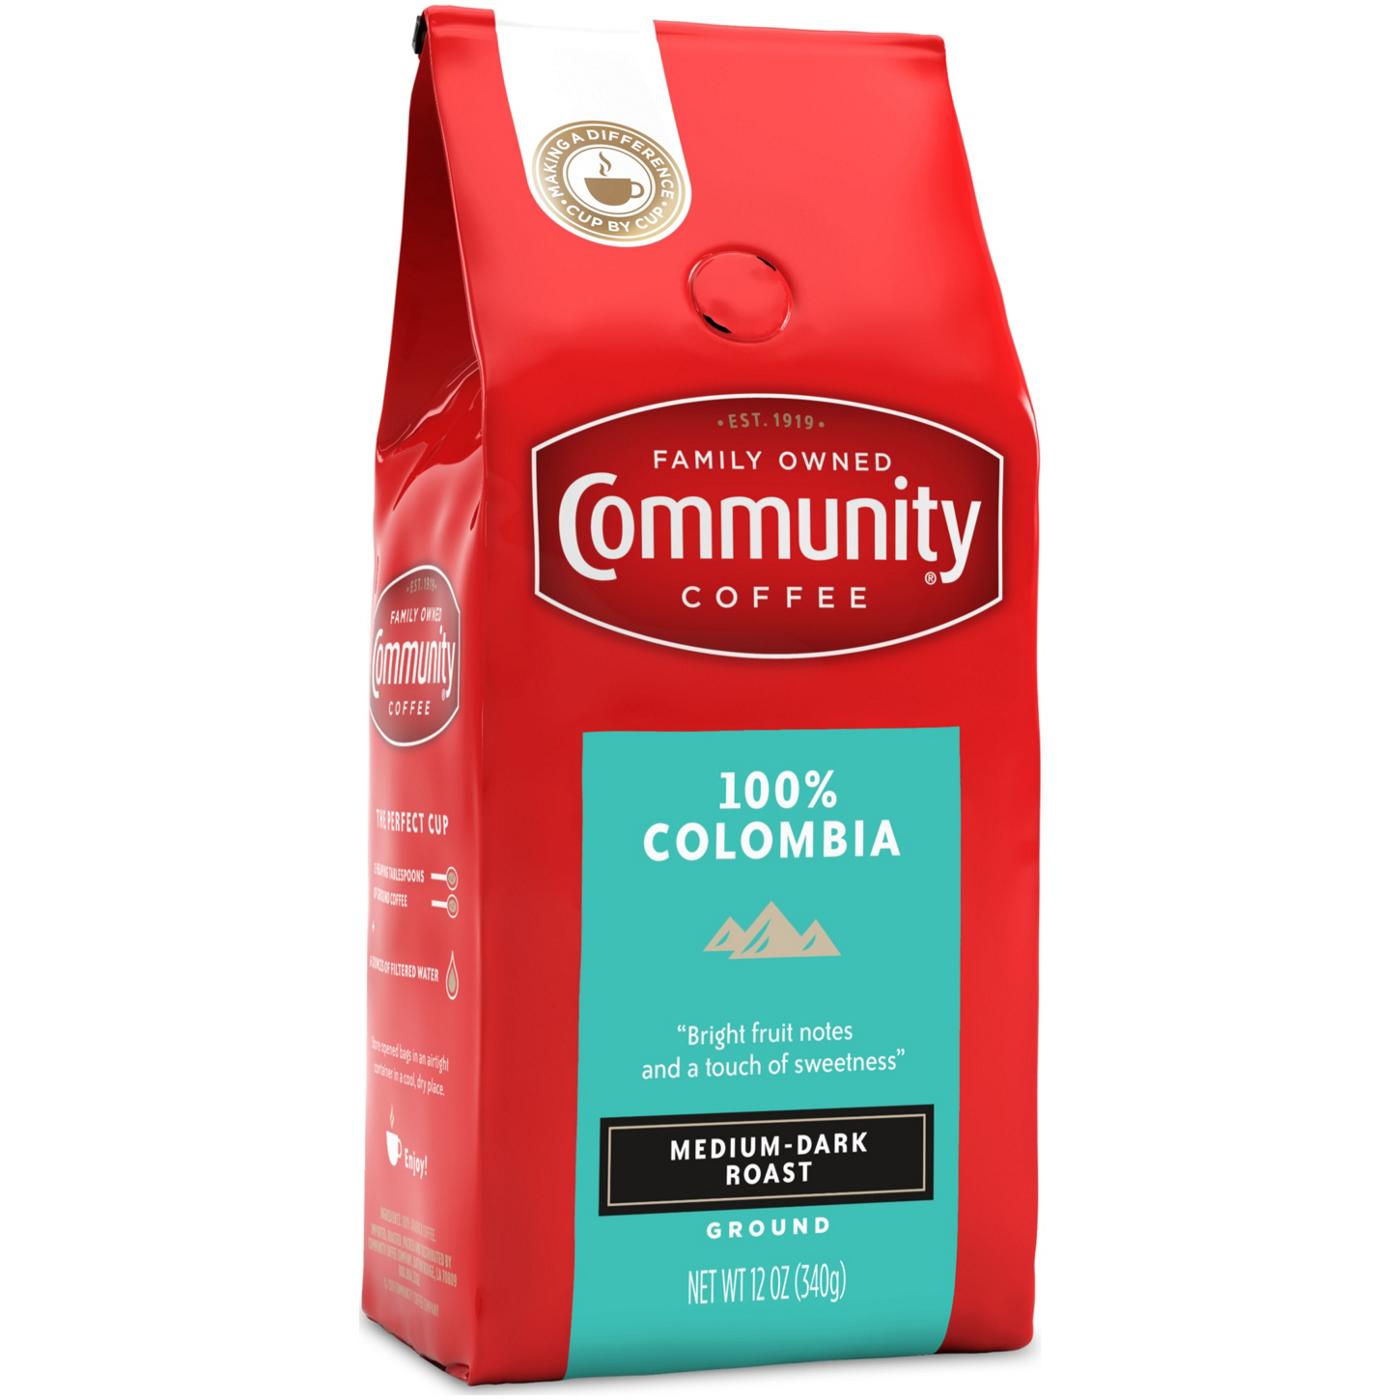 Community Coffee 100% Colombia Medium-Dark Roast Ground Coffee; image 1 of 2